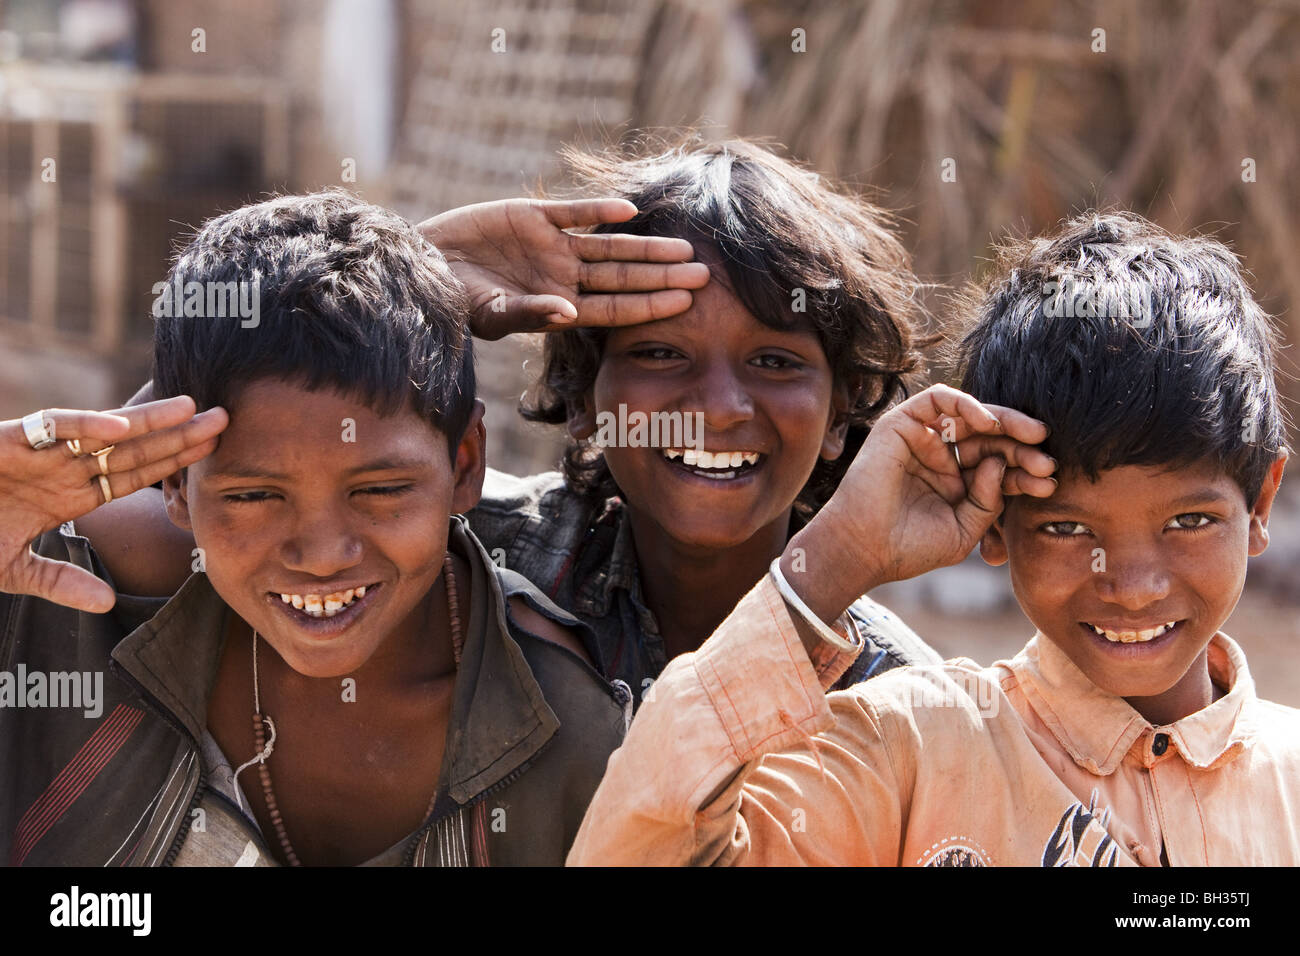 Indian street children Stock Photo